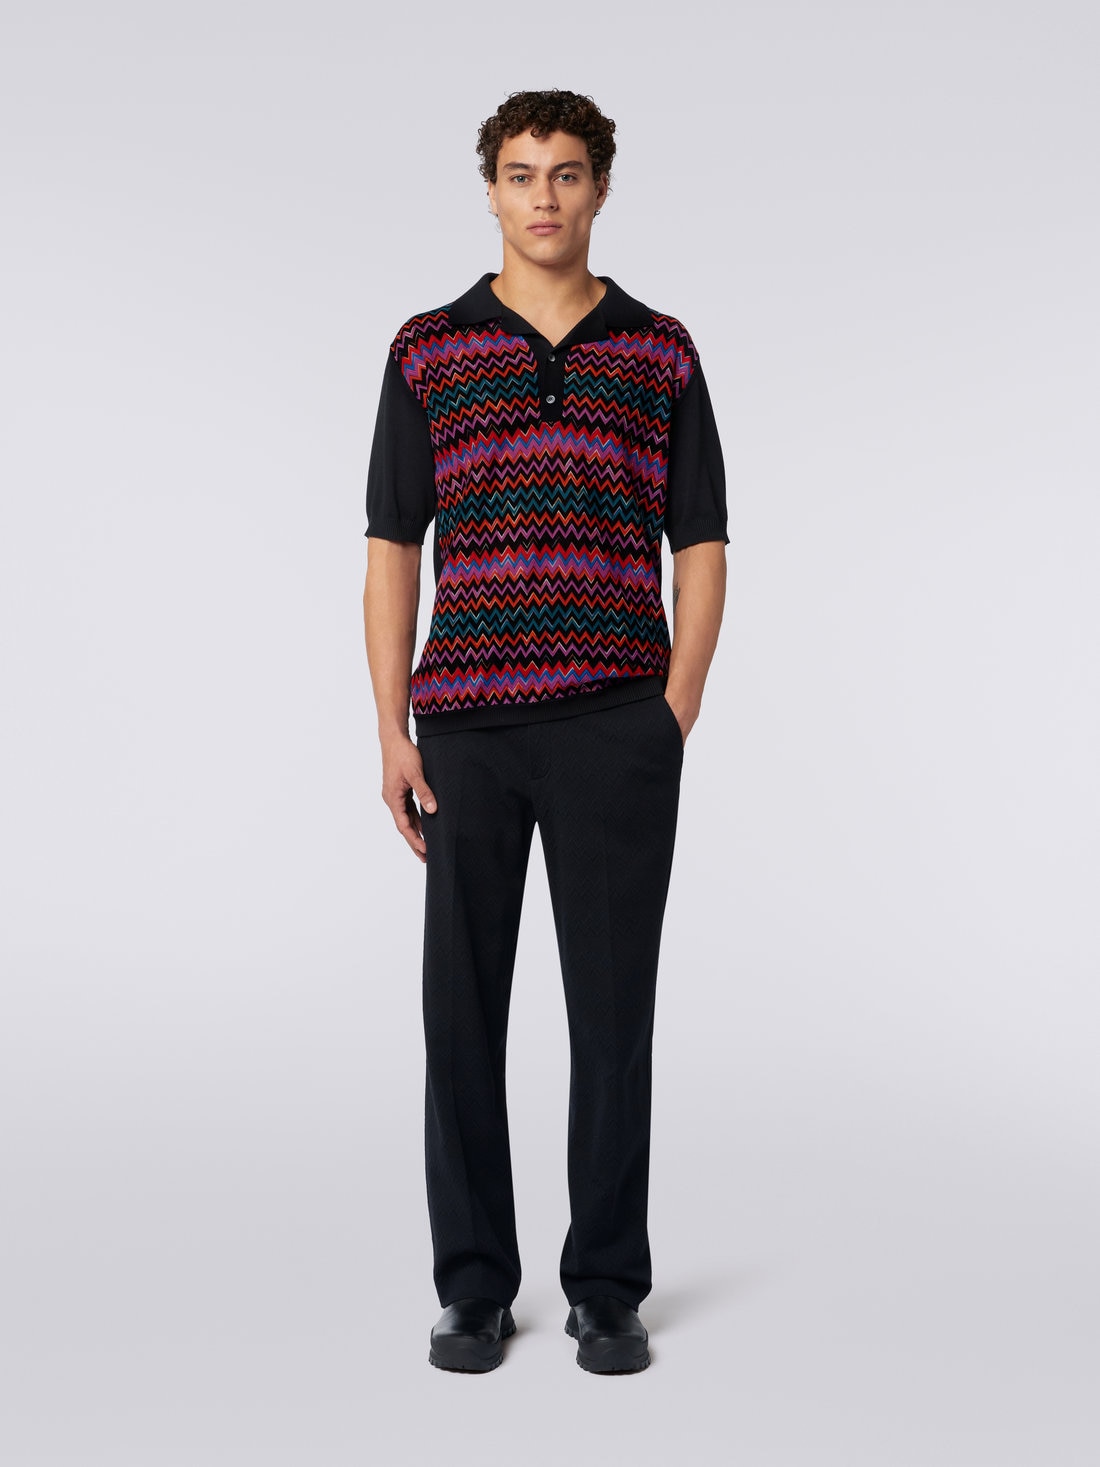 Short-sleeved polo shirt in cotton, viscose and silk chevron, Black    - US23W203BK026MSM8WN - 1